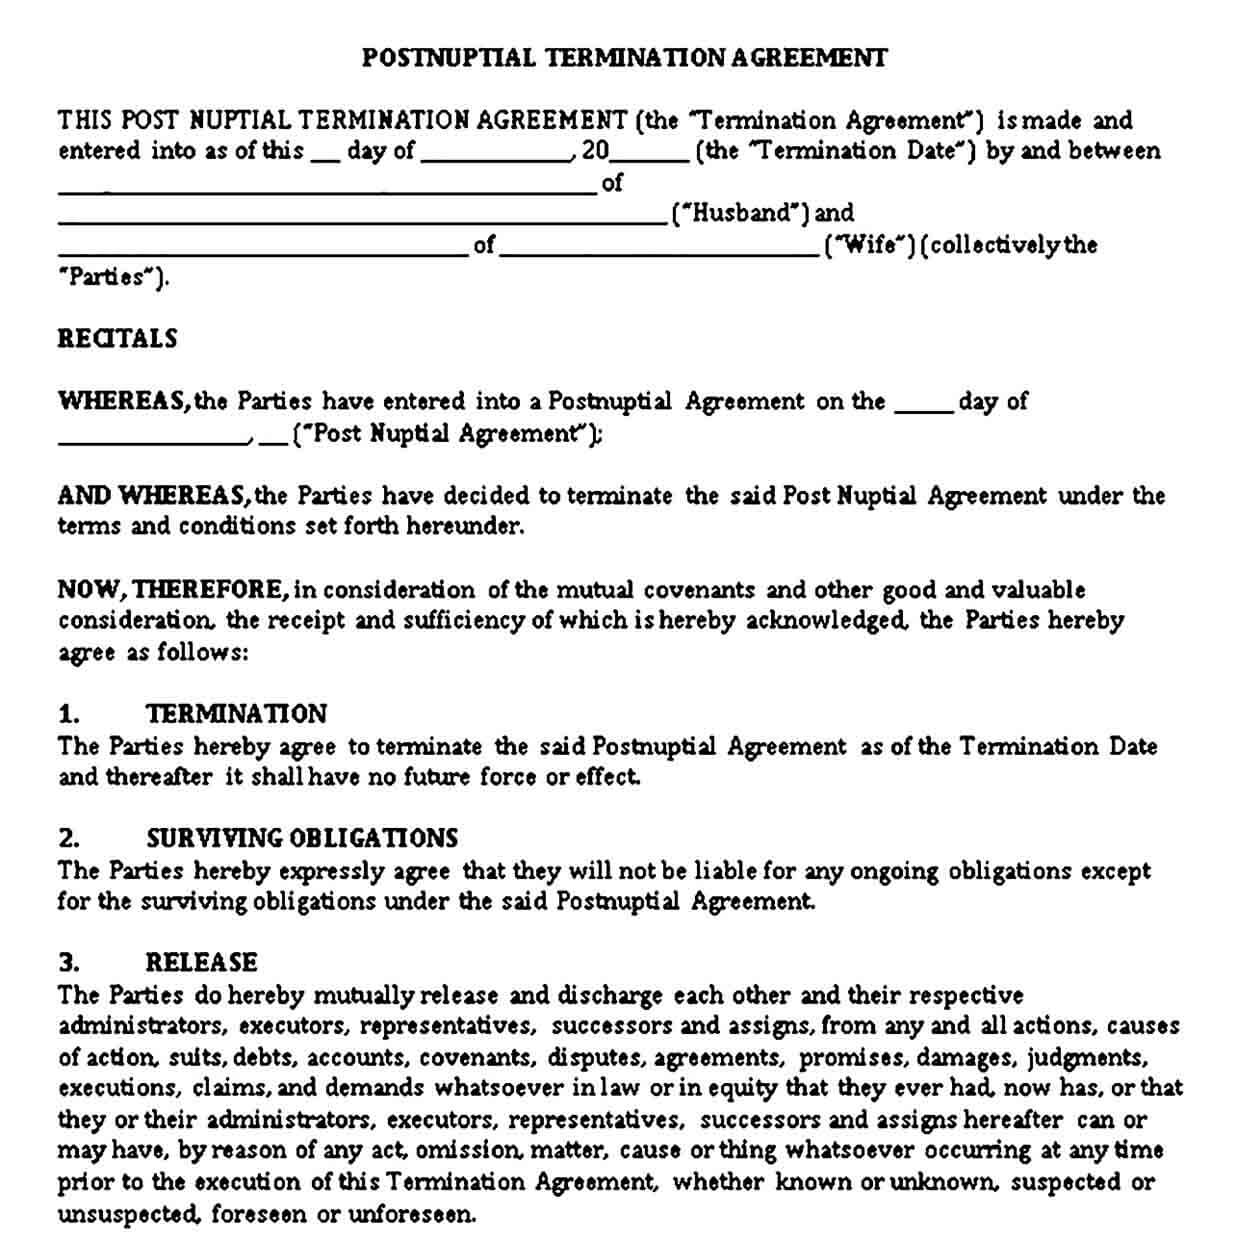 Postnuptial Termination Agreement